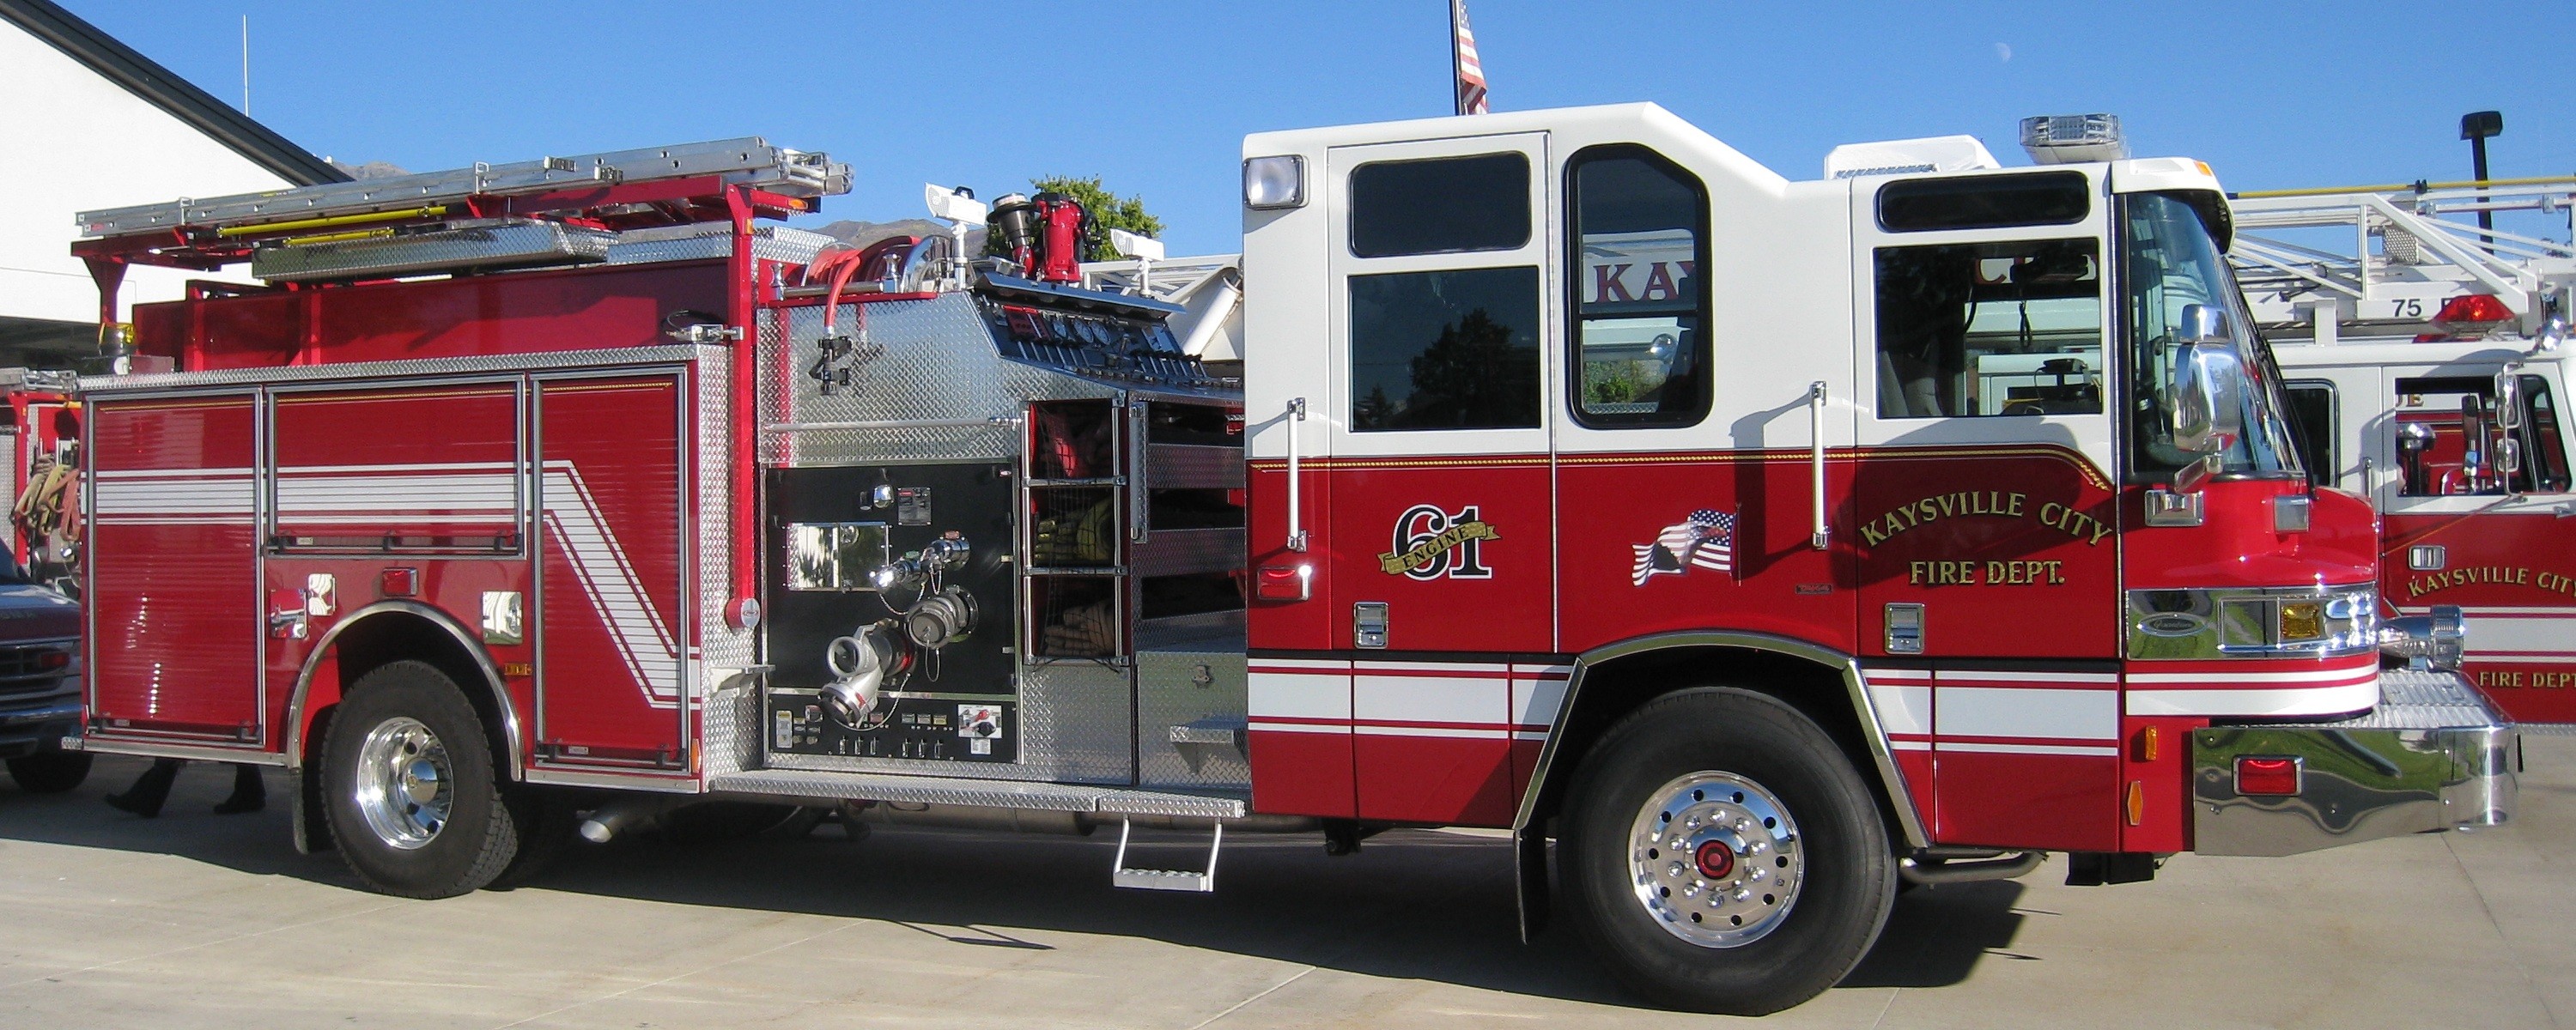 3000x1200 Cool Fire Truck Wallpapers Kaysville city fire engine 